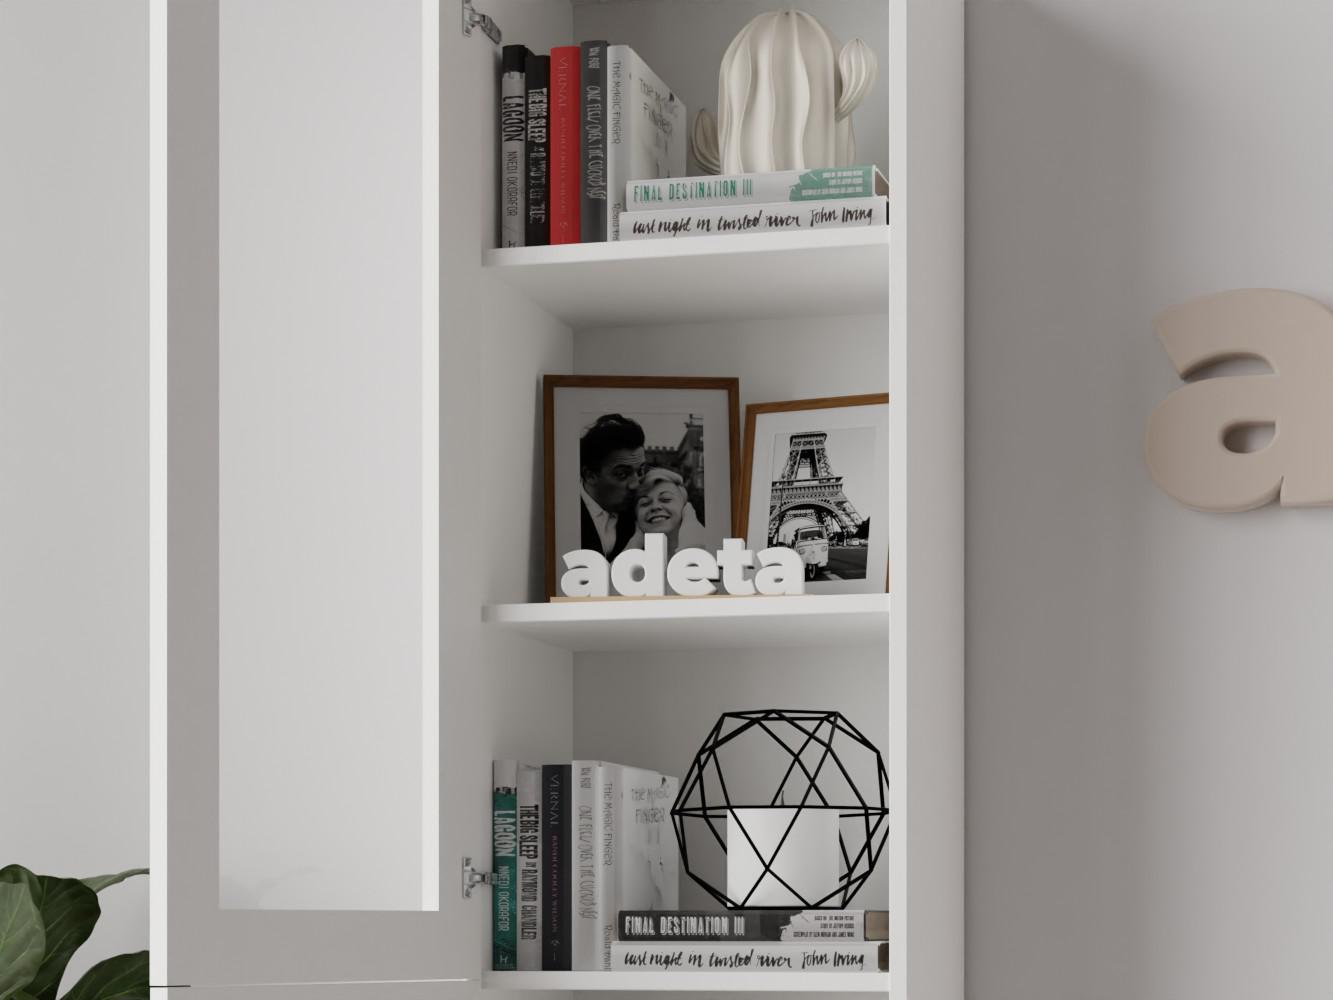 Книжный шкаф Билли 331 white ИКЕА (IKEA) изображение товара